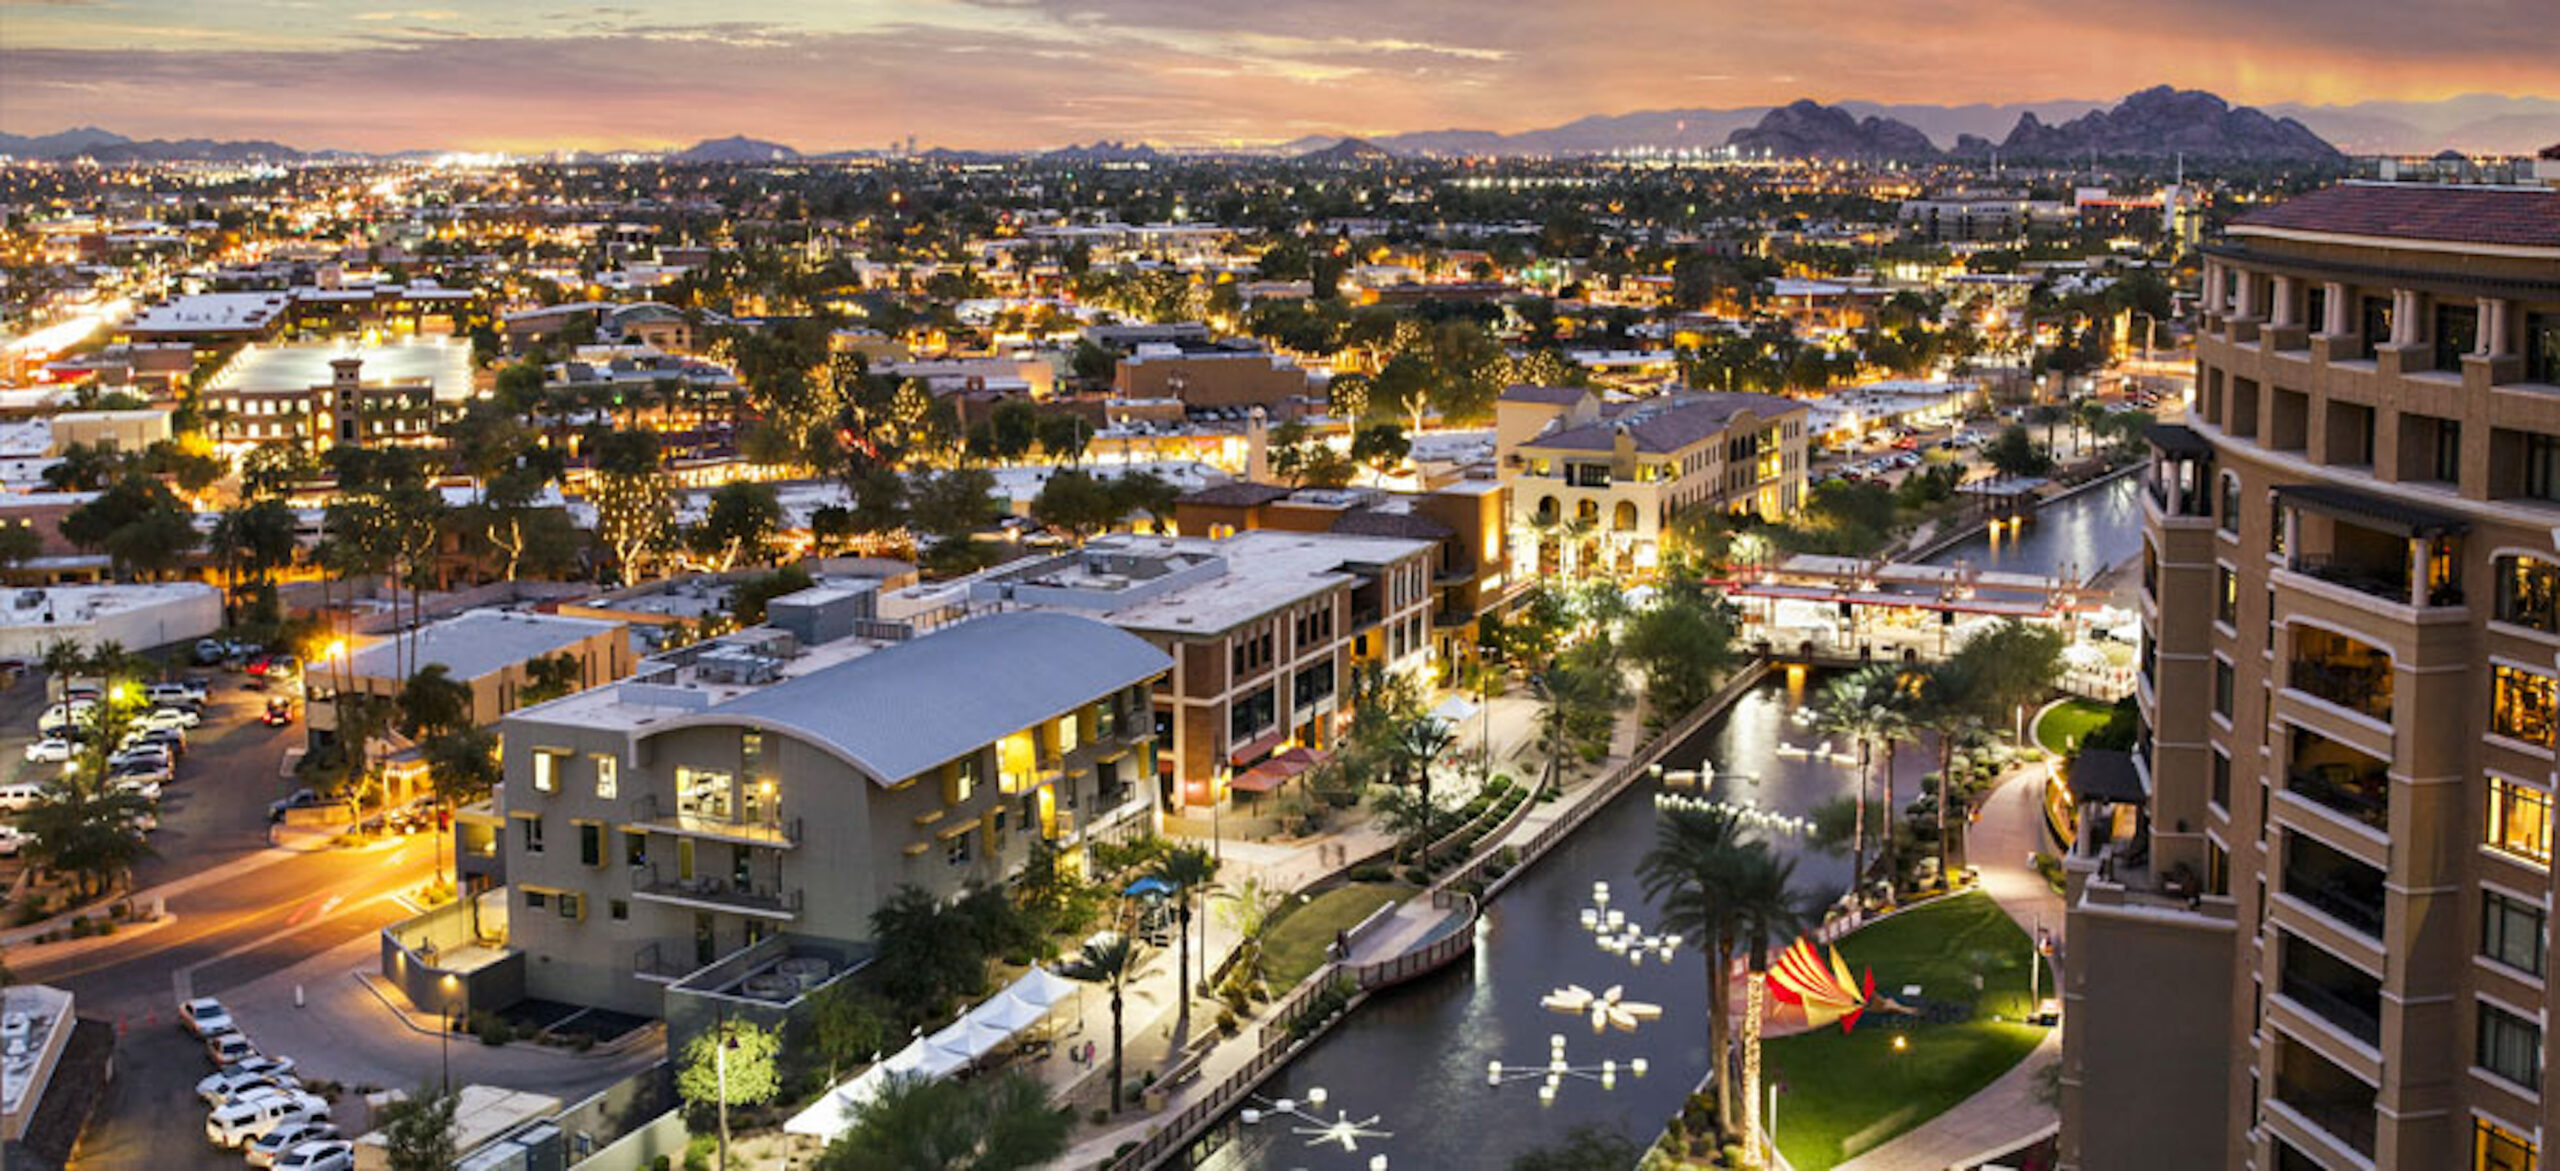 City of Scottsdale - Vacation Rentals & Short-Term Rentals